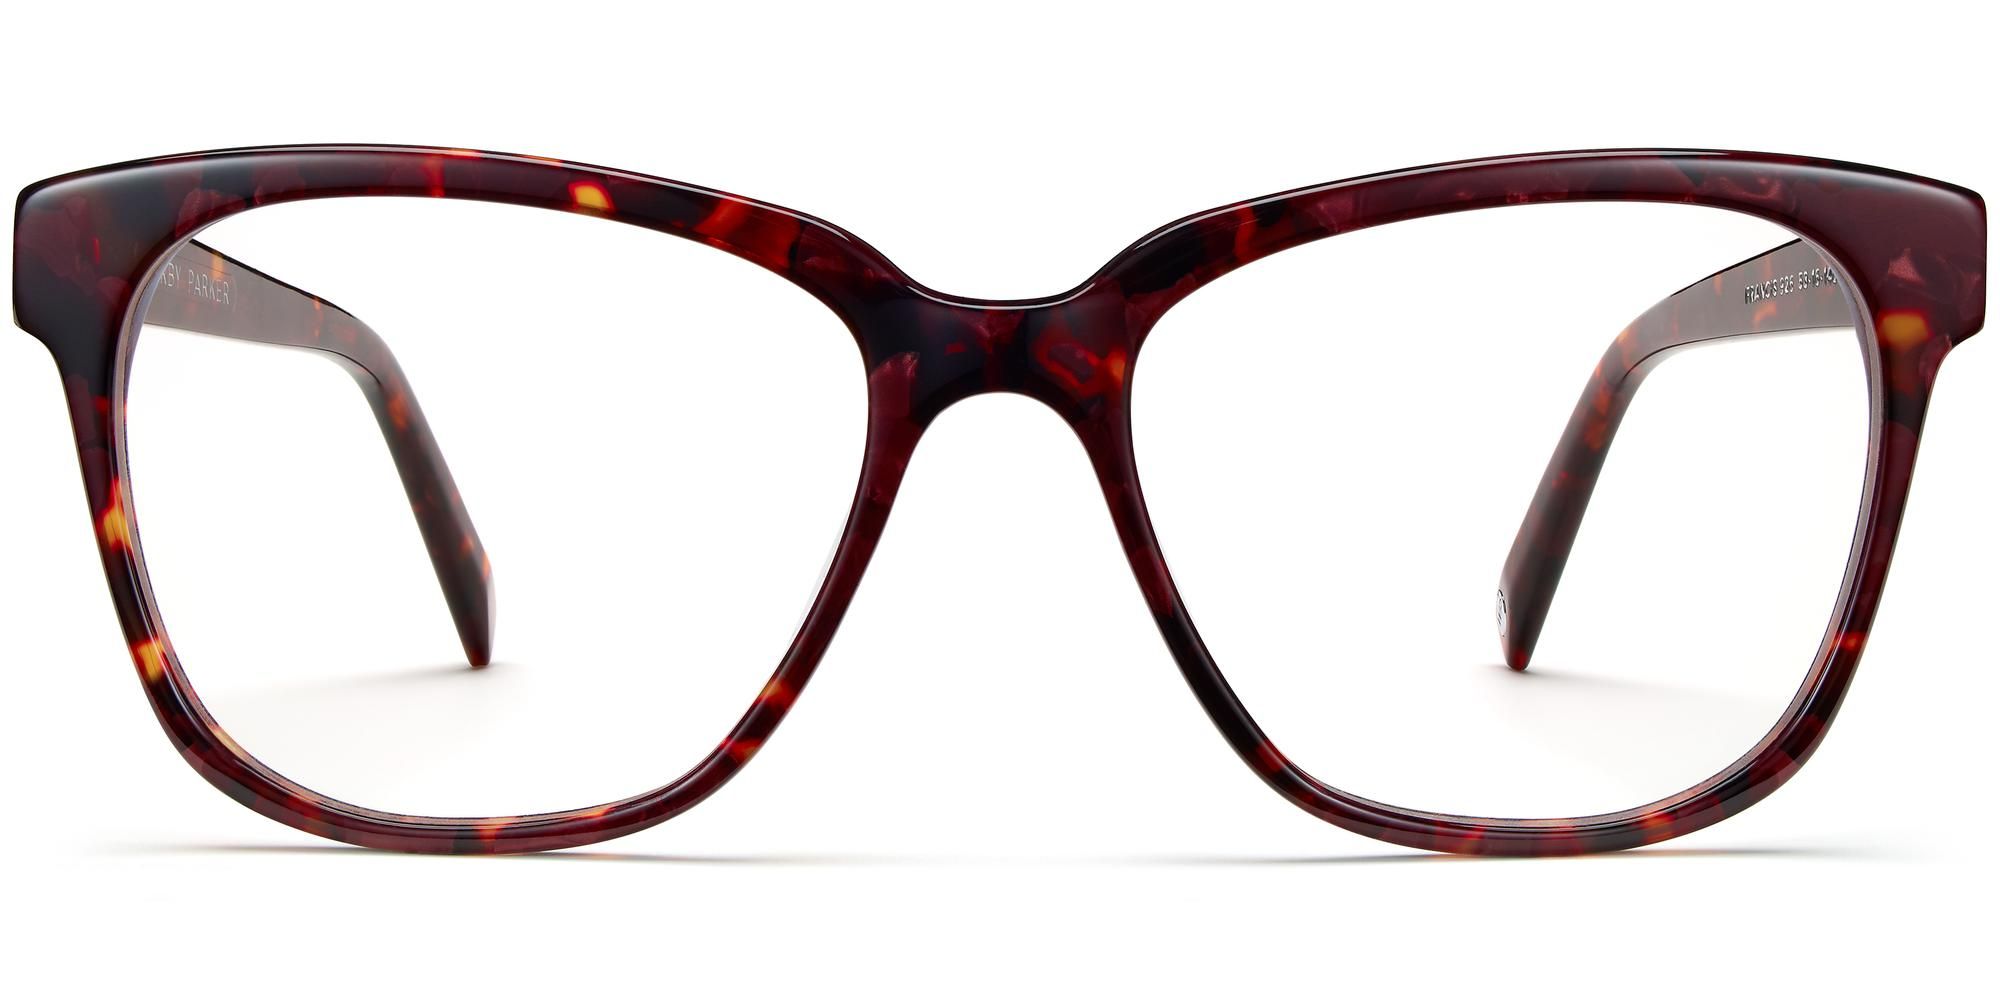 Francis Eyeglasses in Fig Tortoise for Women | Warby Parker